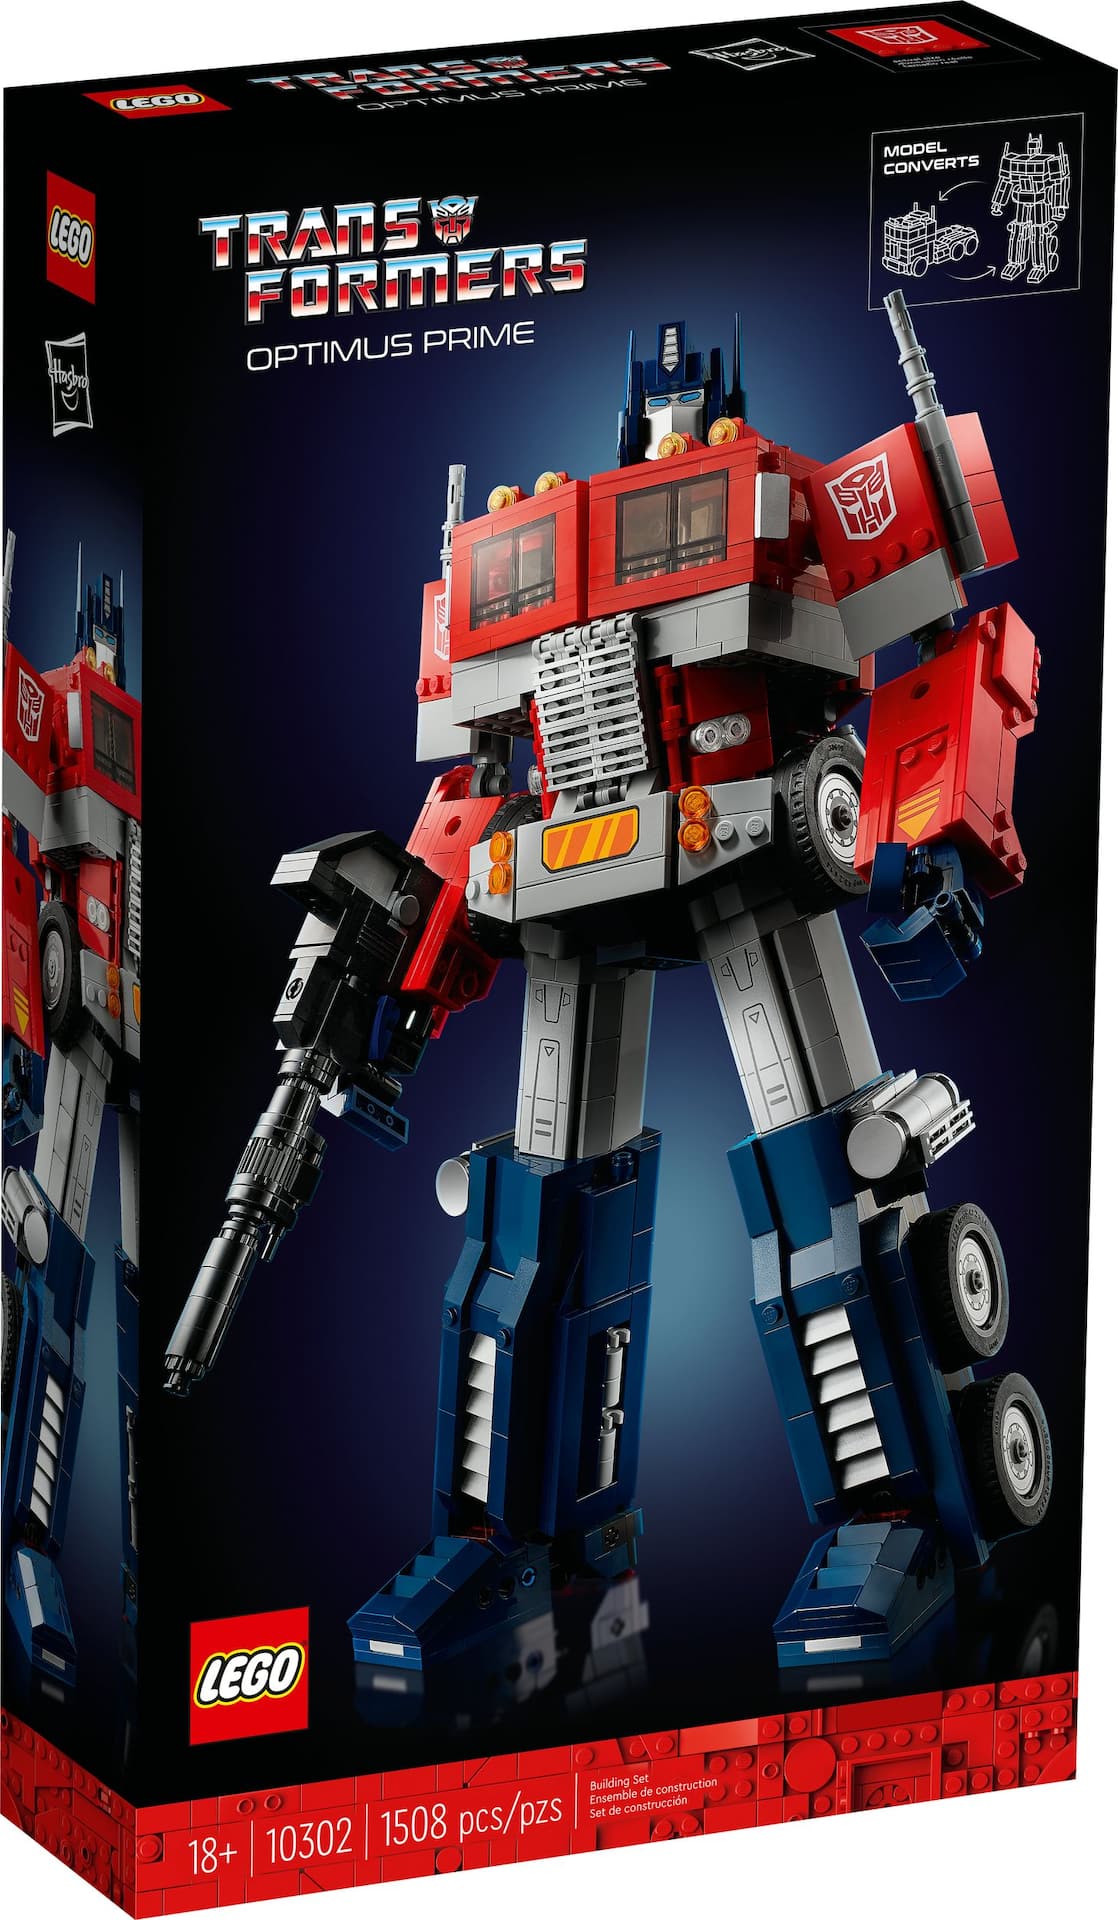 gravel Express Shrug shoulders LEGO® Optimus Prime - 10302, Ages 4+ | Canadian Tire